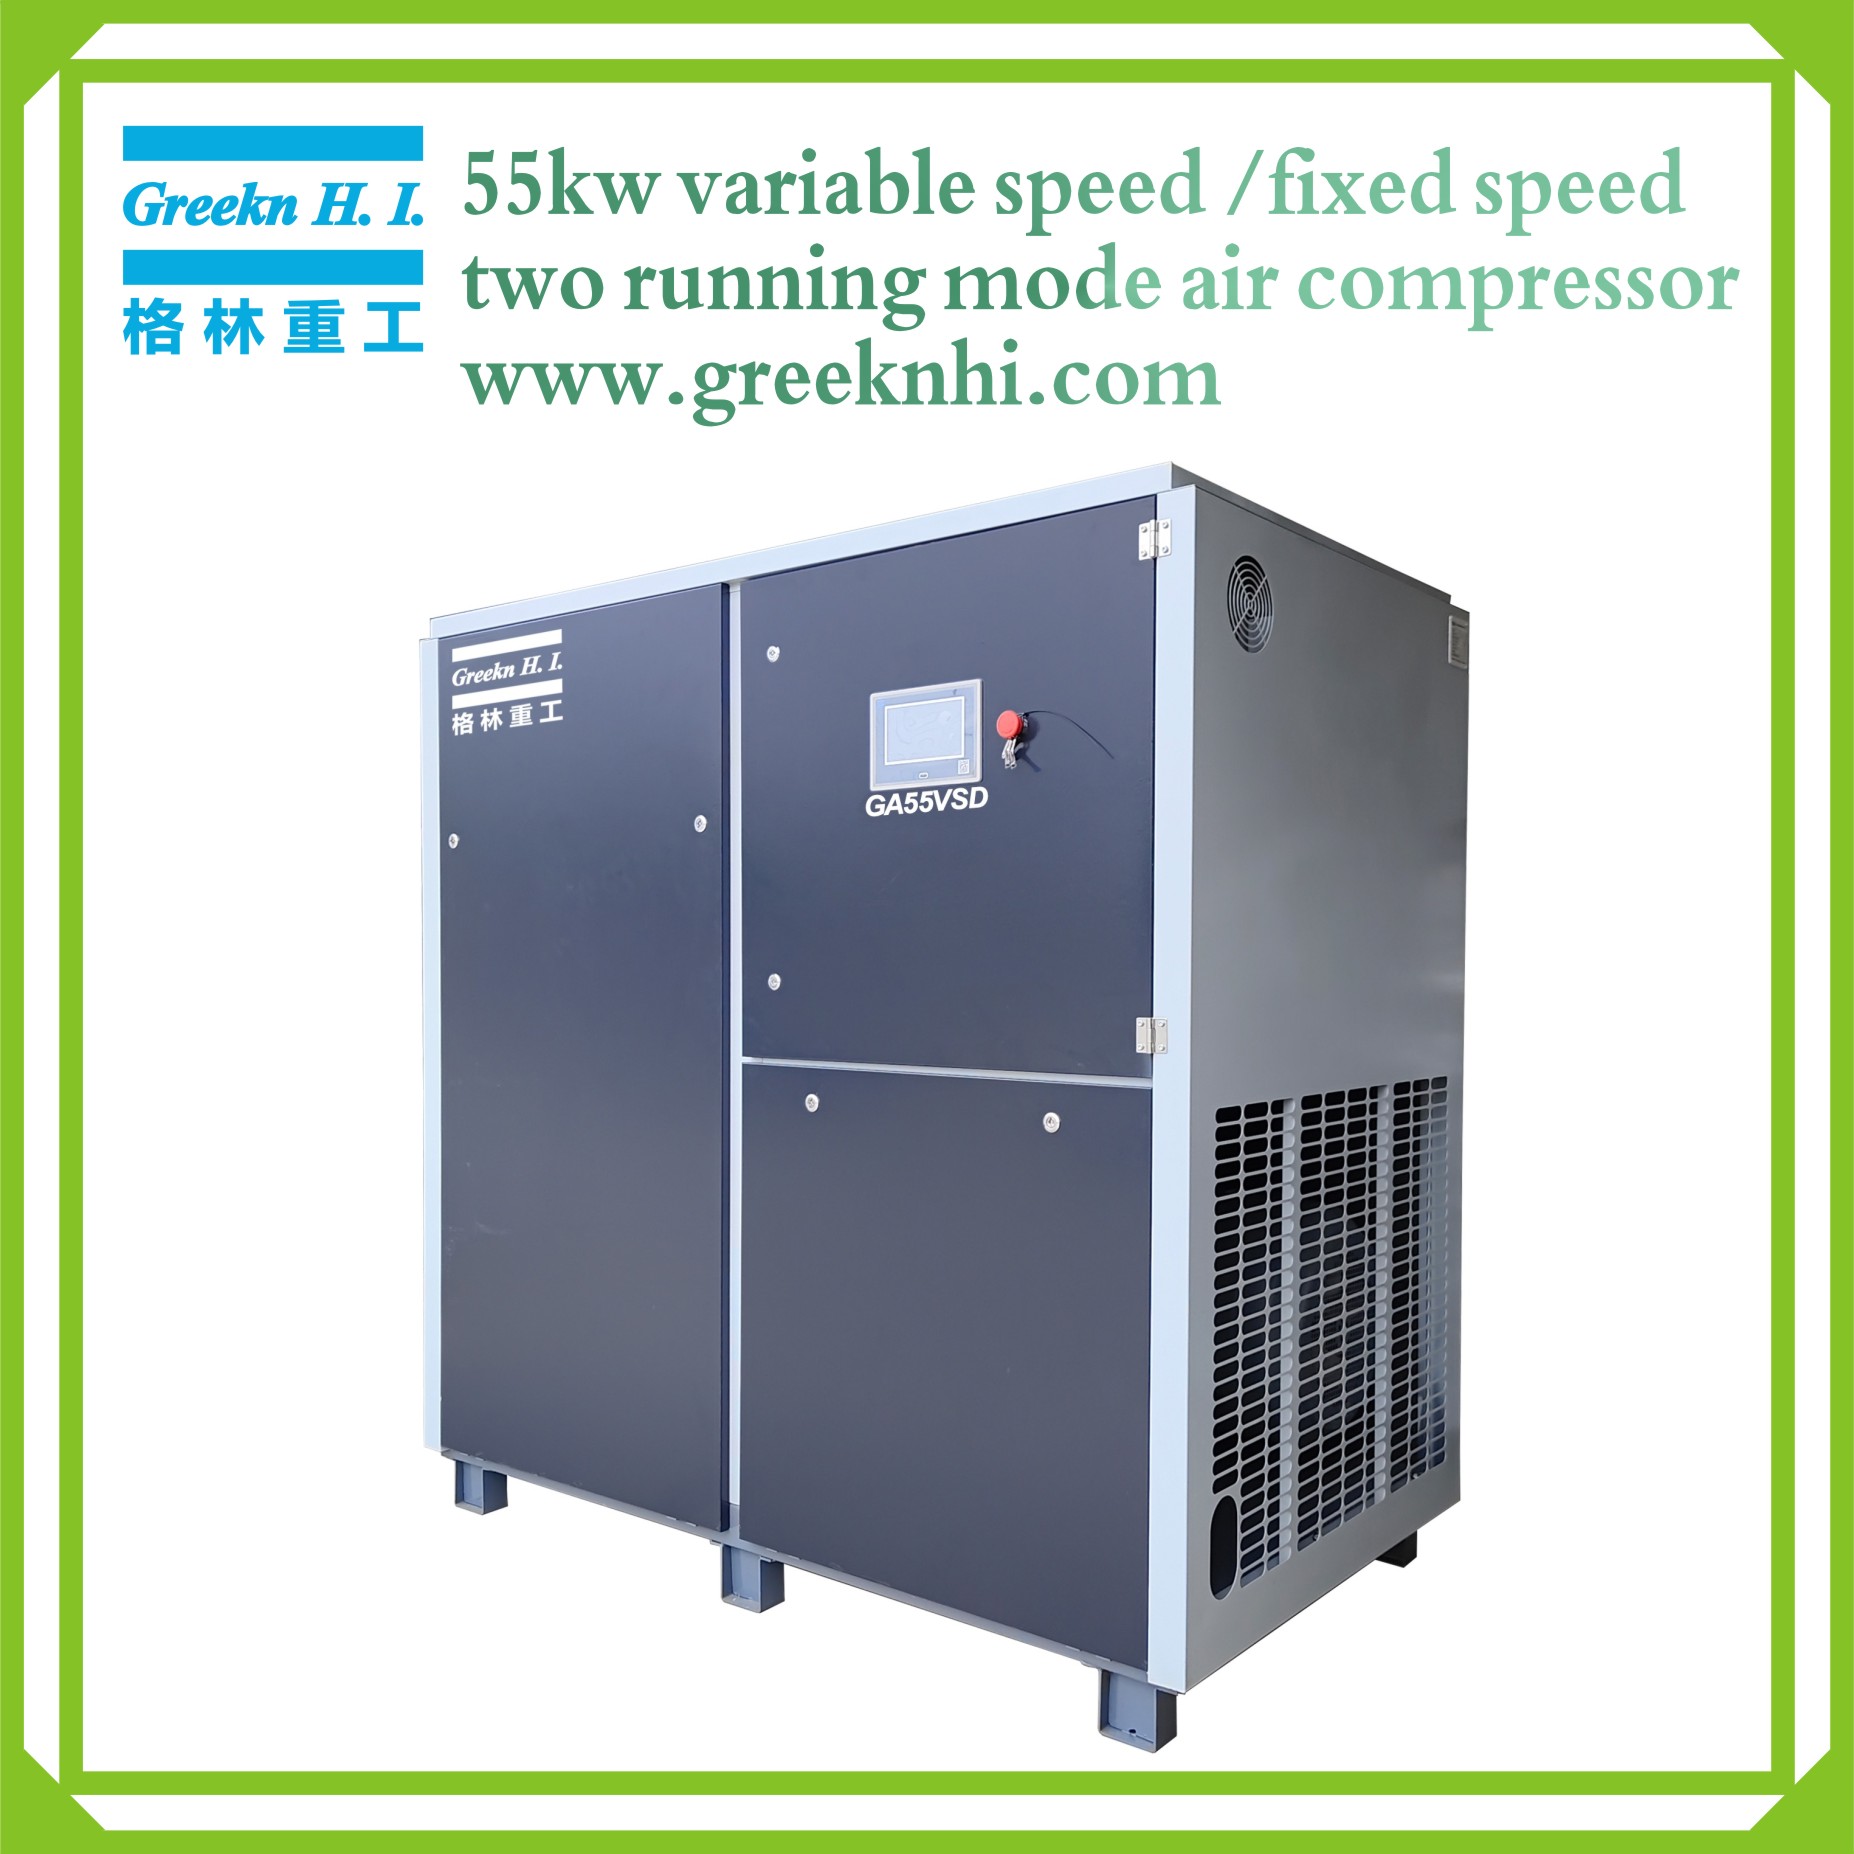 Greeknhi variable speed screw air compressor GA55VSD two running mode air compressor